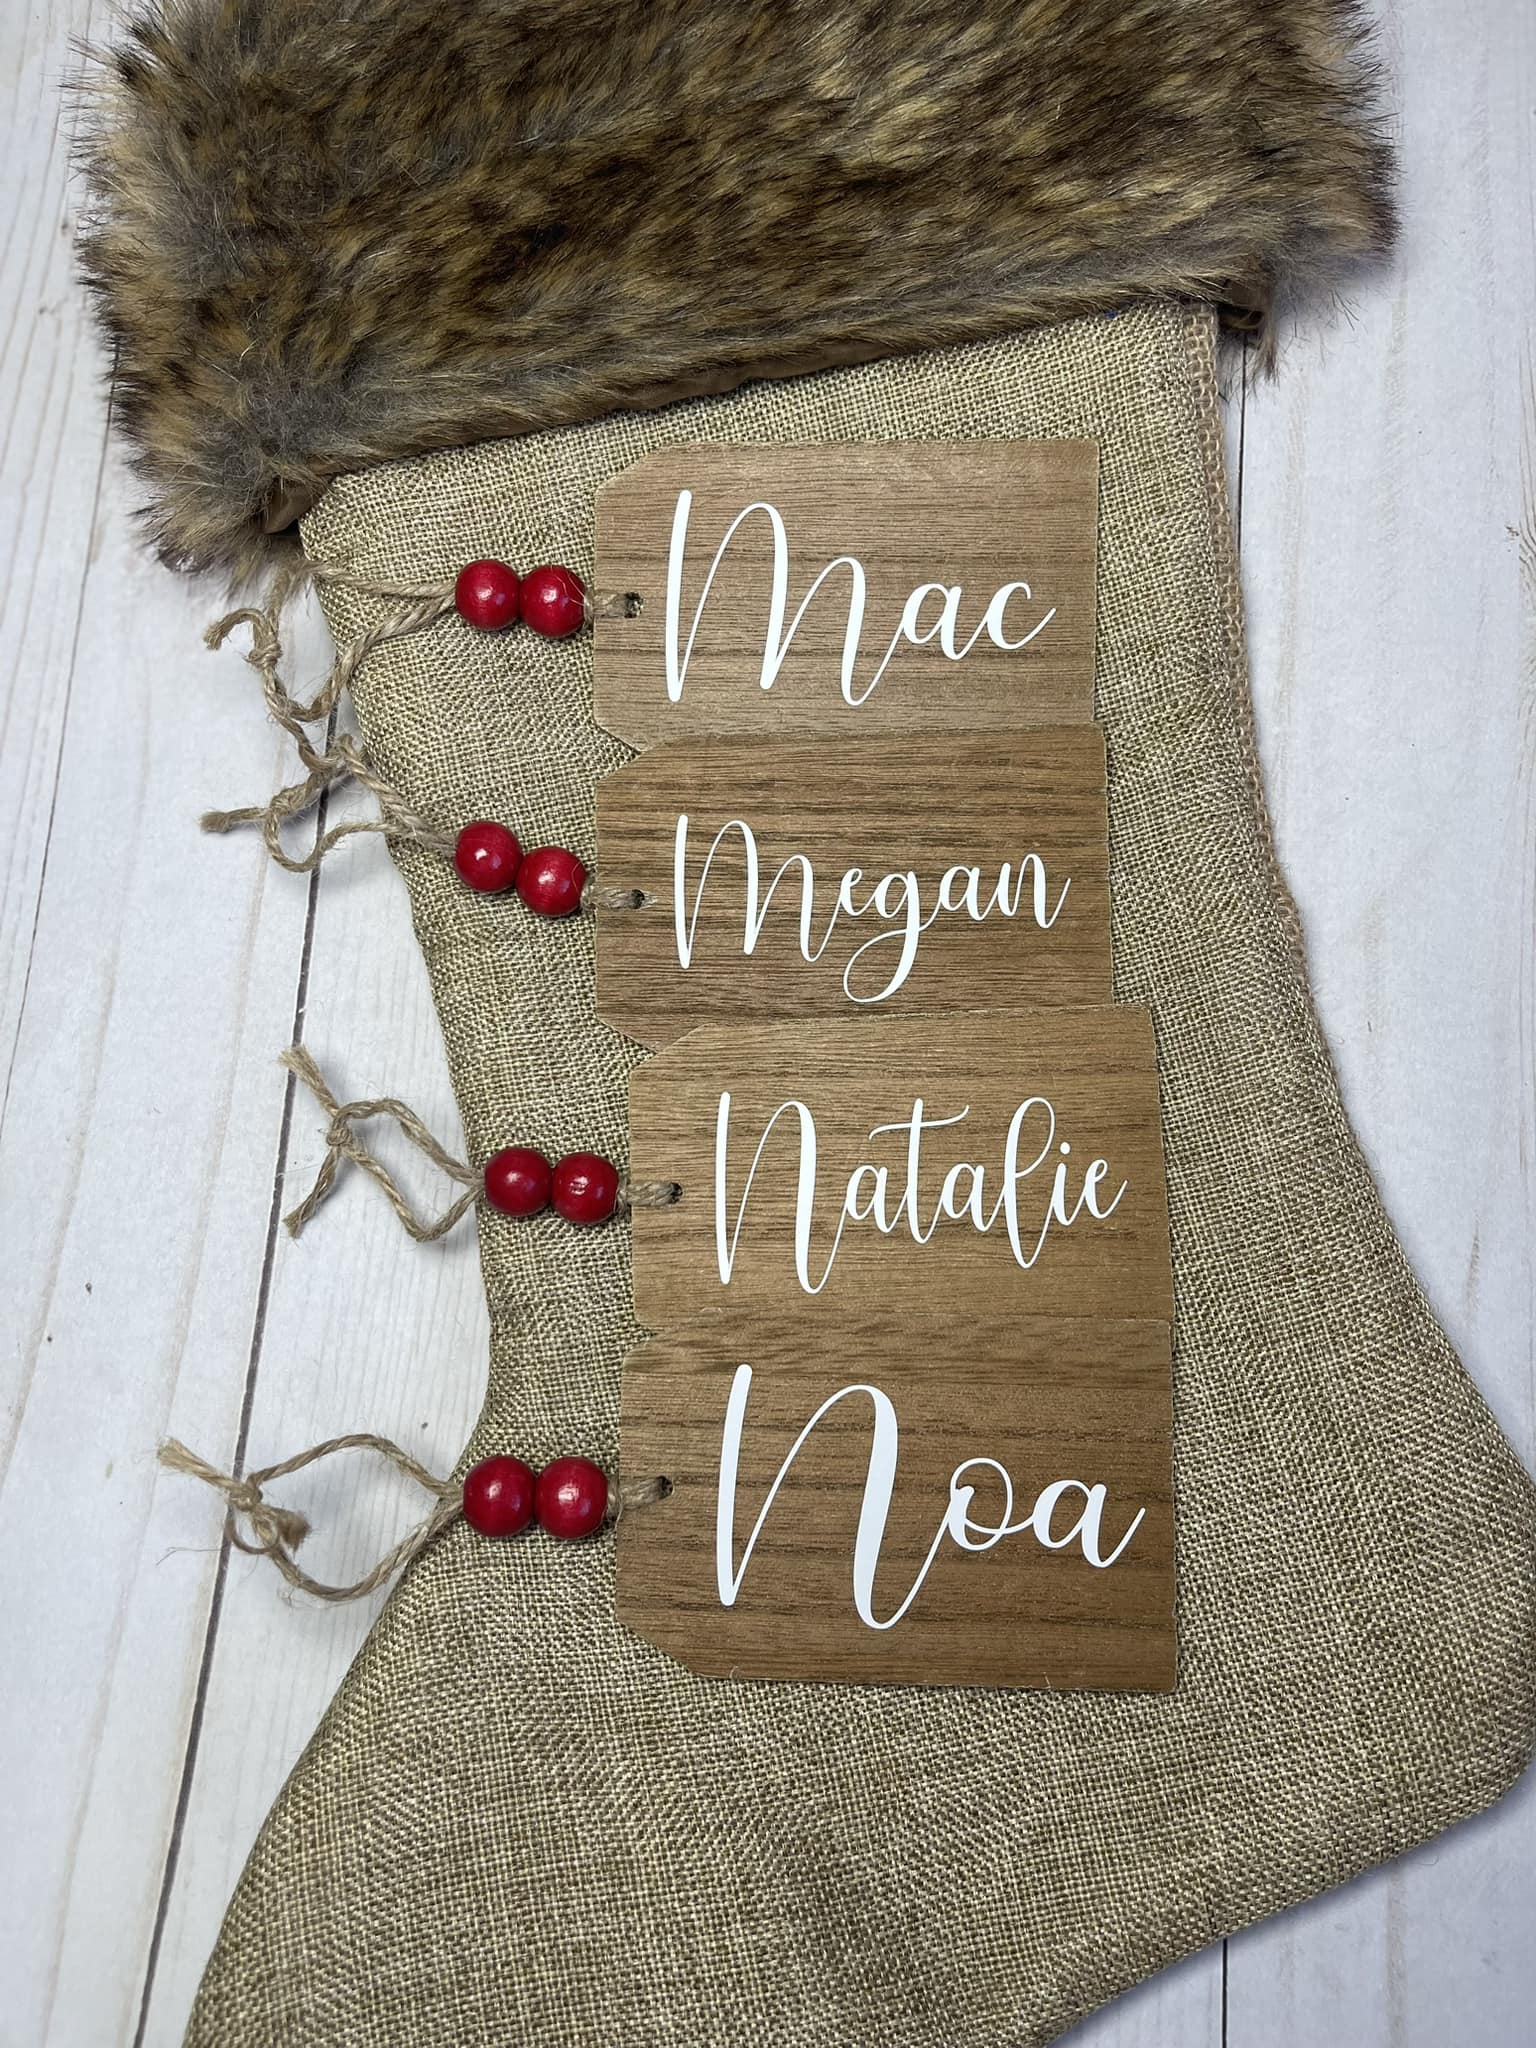 ArmyWife Name tags for Christmas stockings